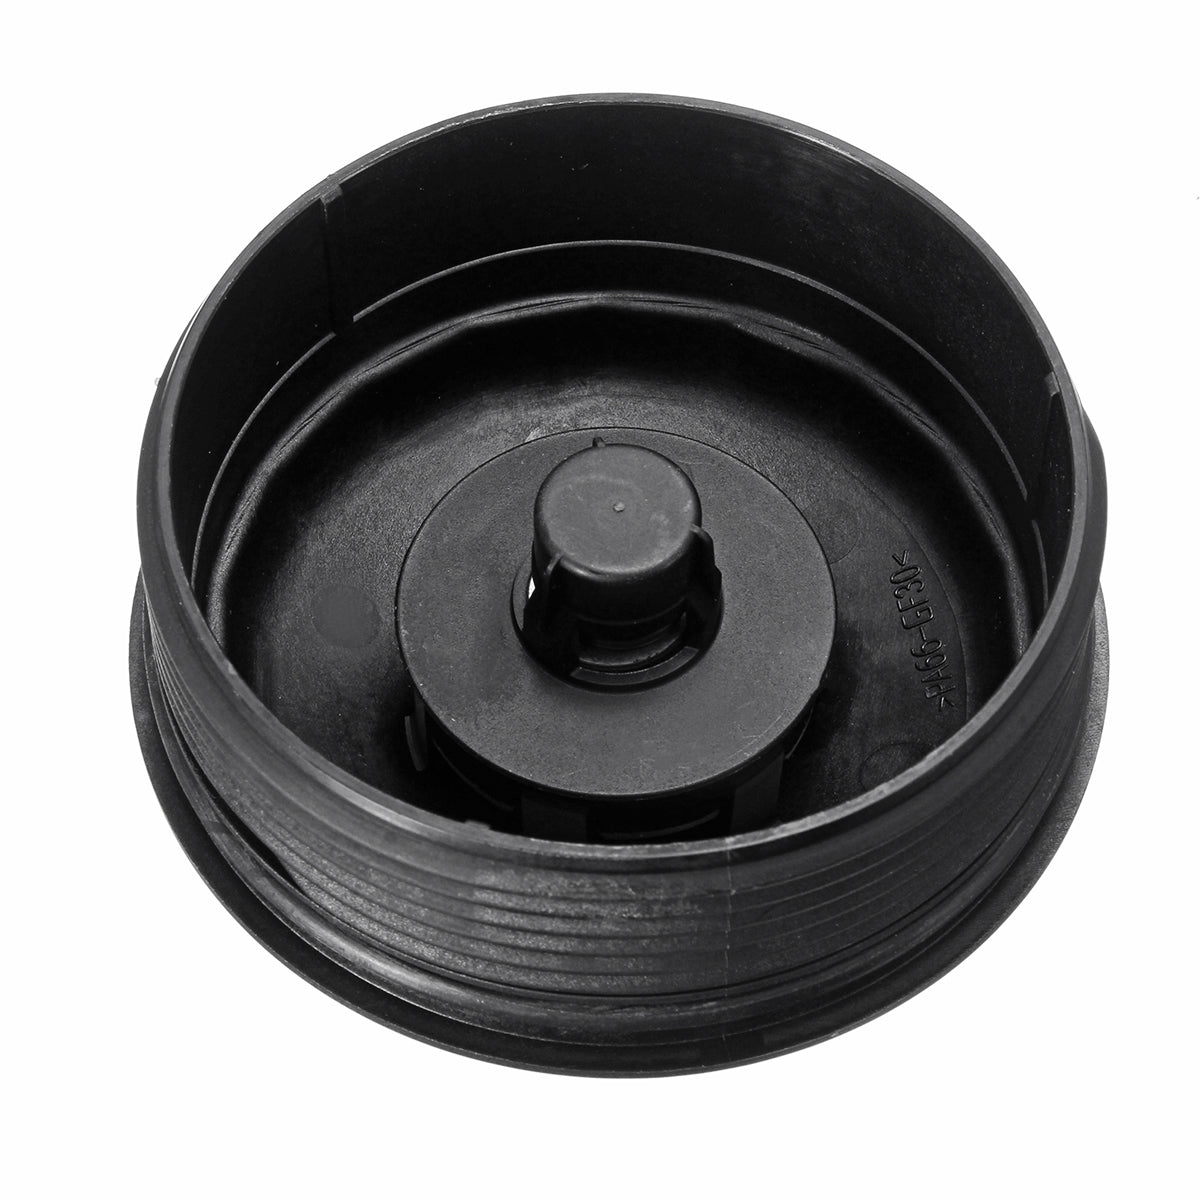 Dim Gray Fuel Oil Filter Cover Cap Bowl